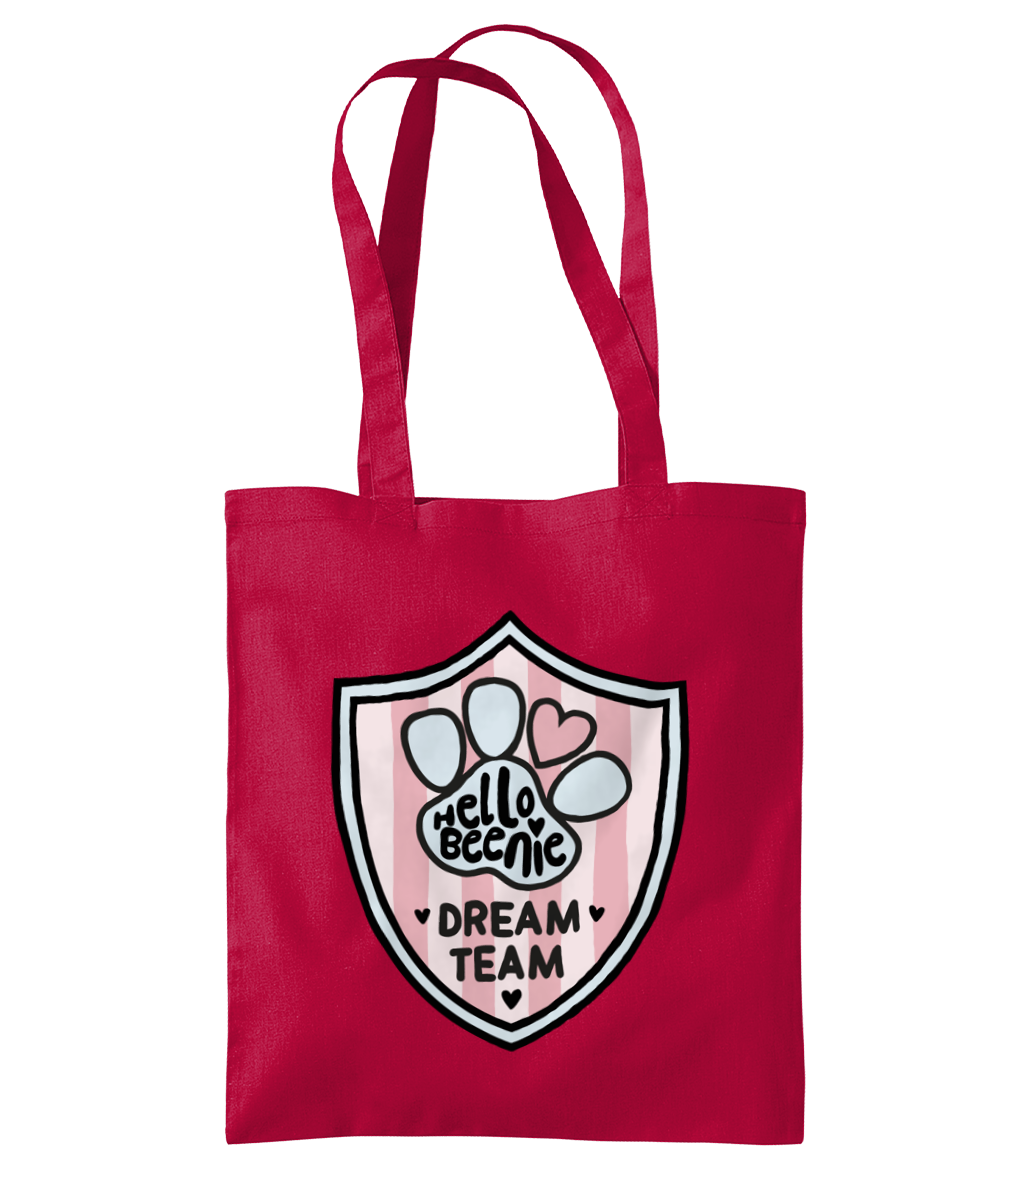 Hello Beenie Dream Team - Organic Premium Cotton Tote Bag